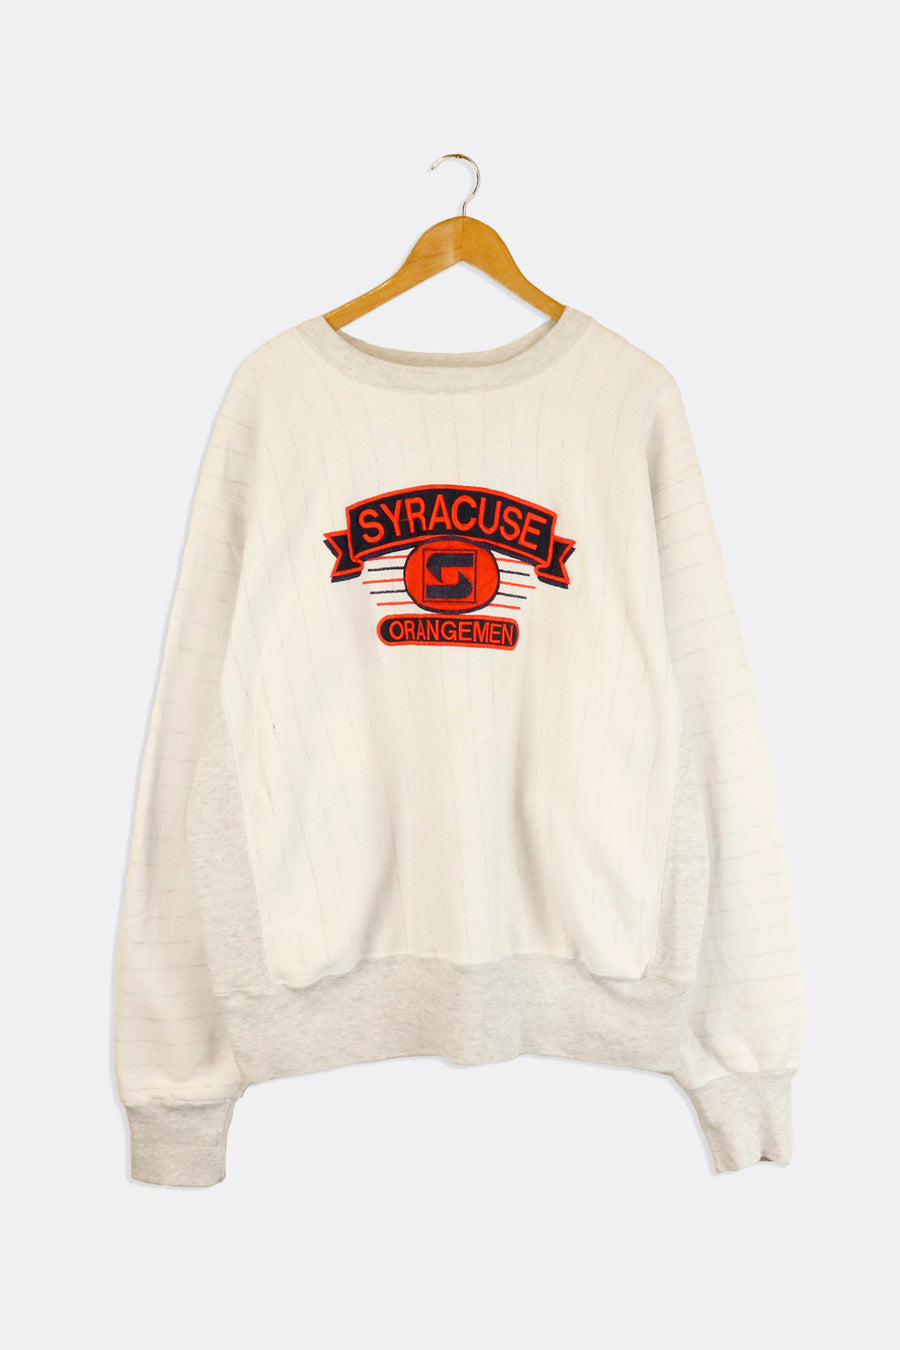 Vintage Varsity Syracuse Orangemen Embroidered And Silky Orange Lettering Navy Background And Stripes Behind Logo Sweatshirt Sz L